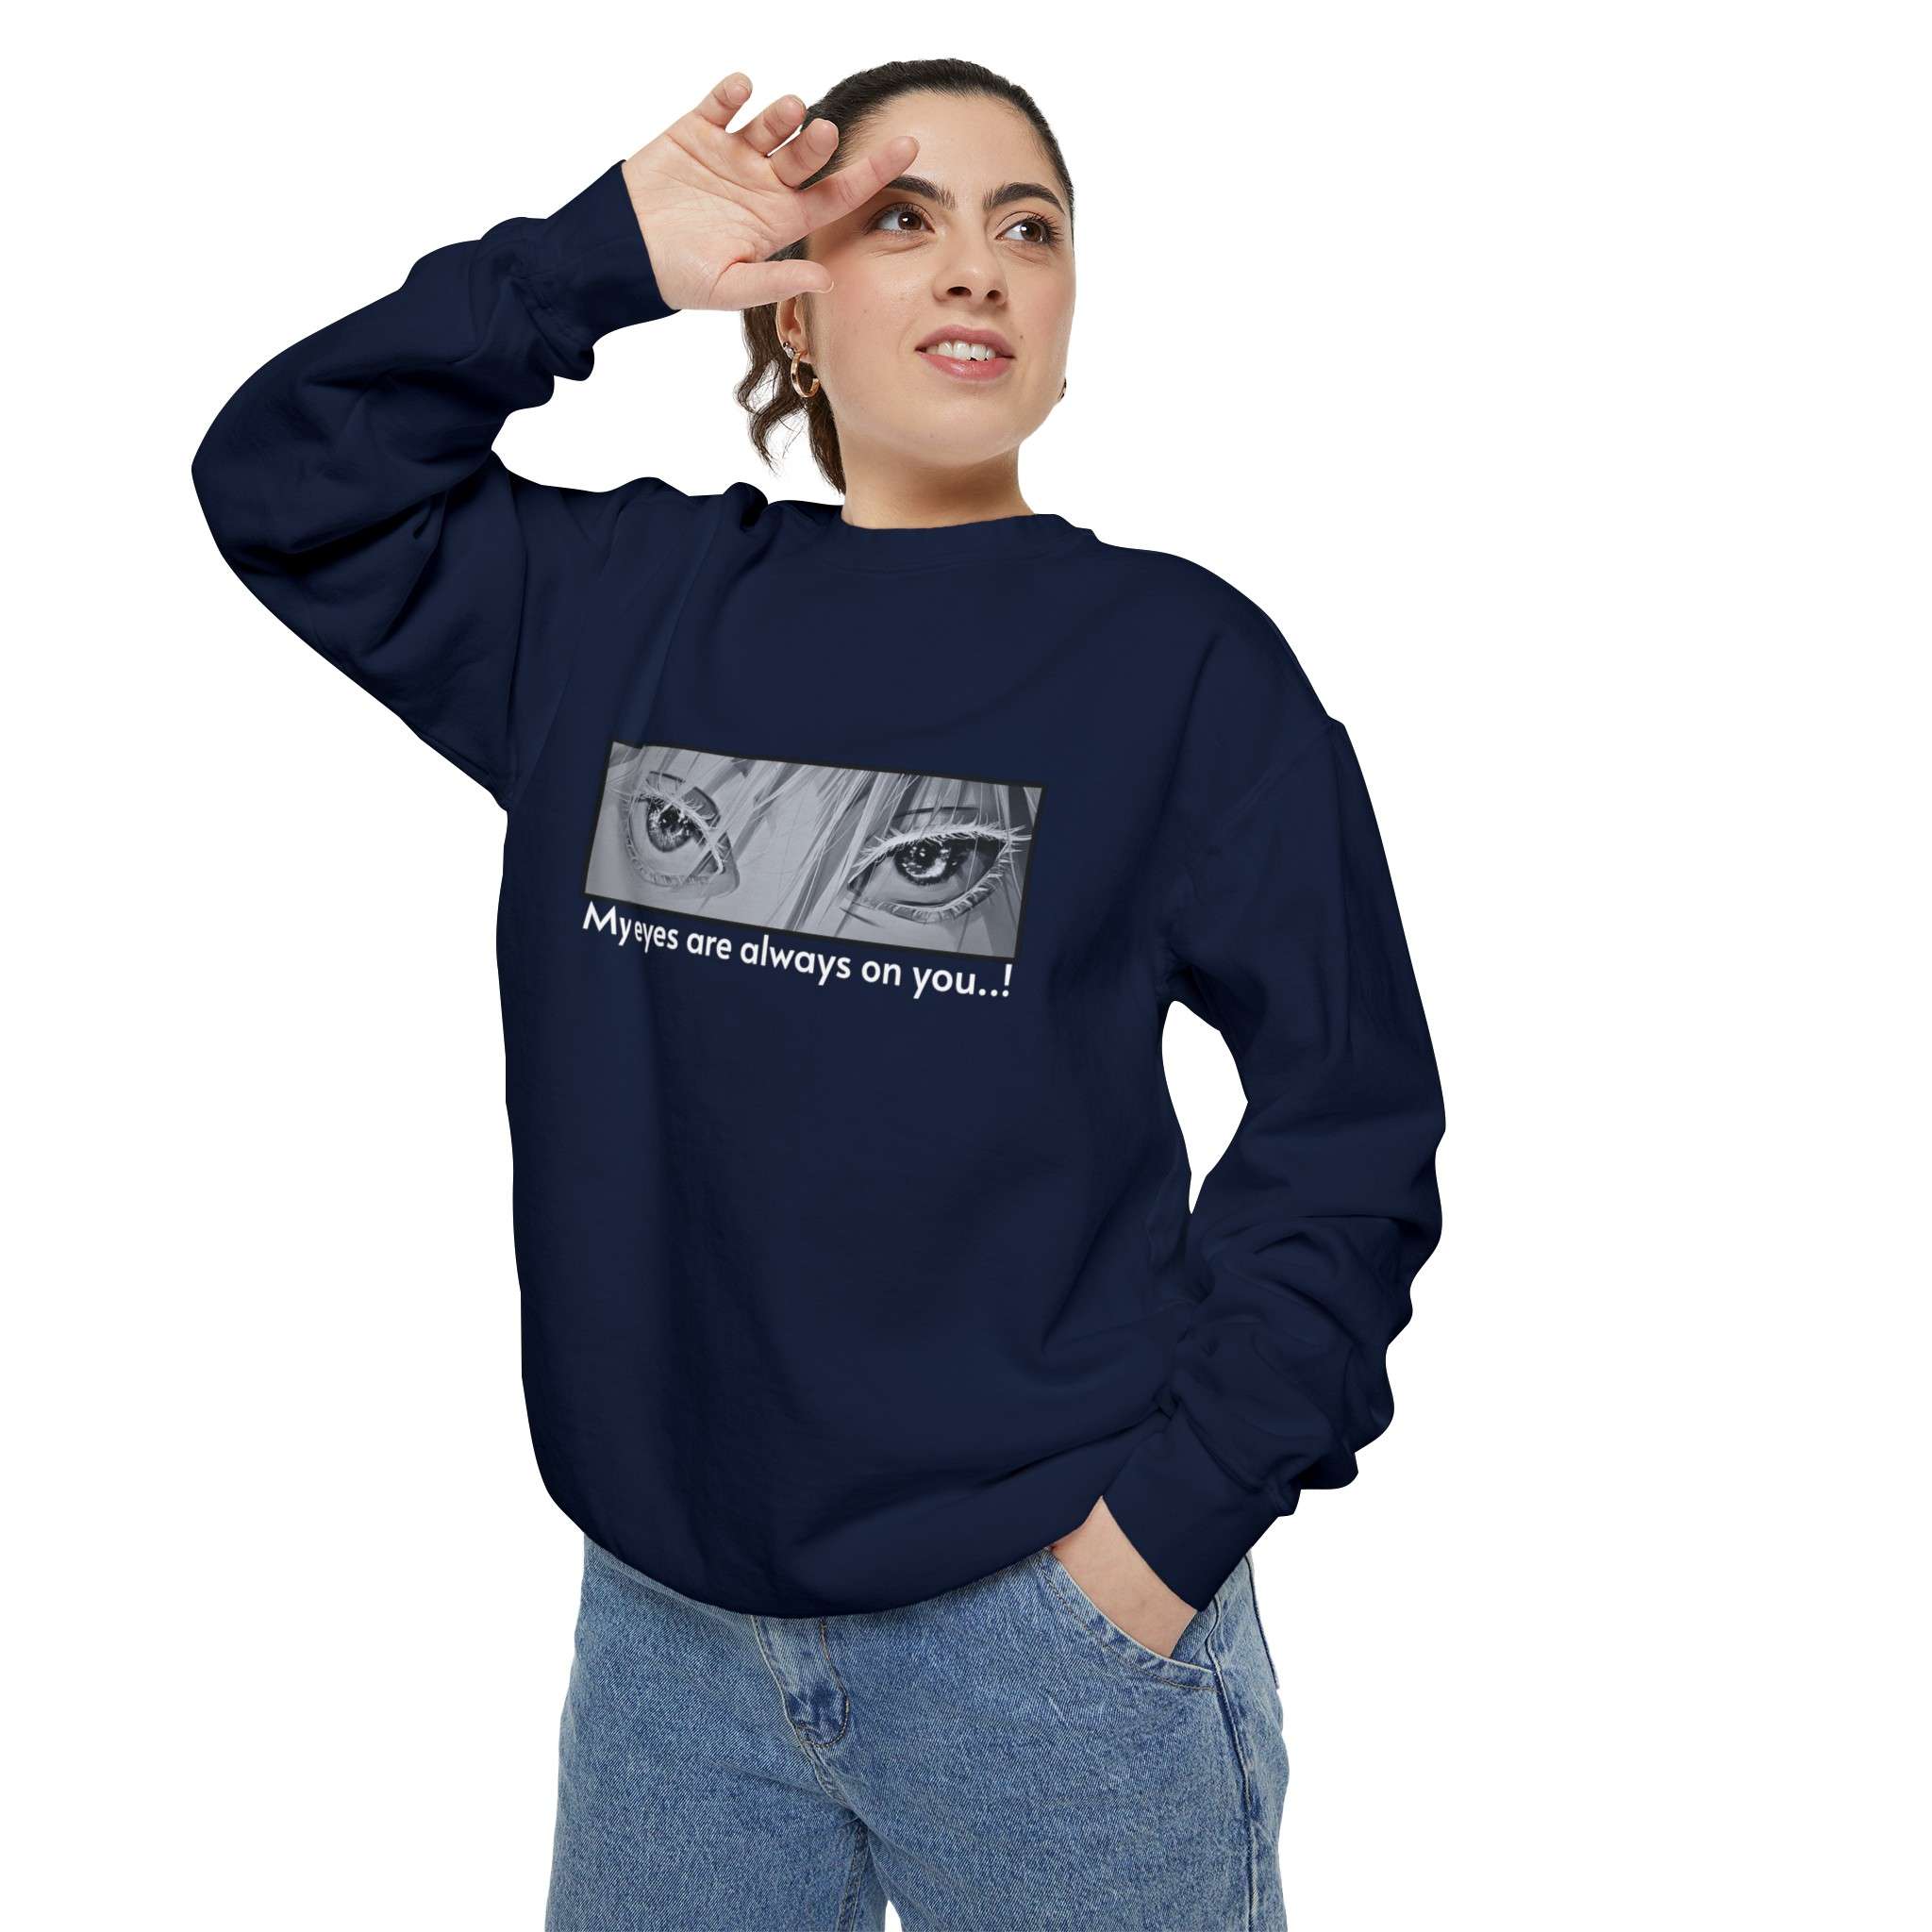 Gojo Satoru Gaze Unisex Garment-Dyed Sweatshirt